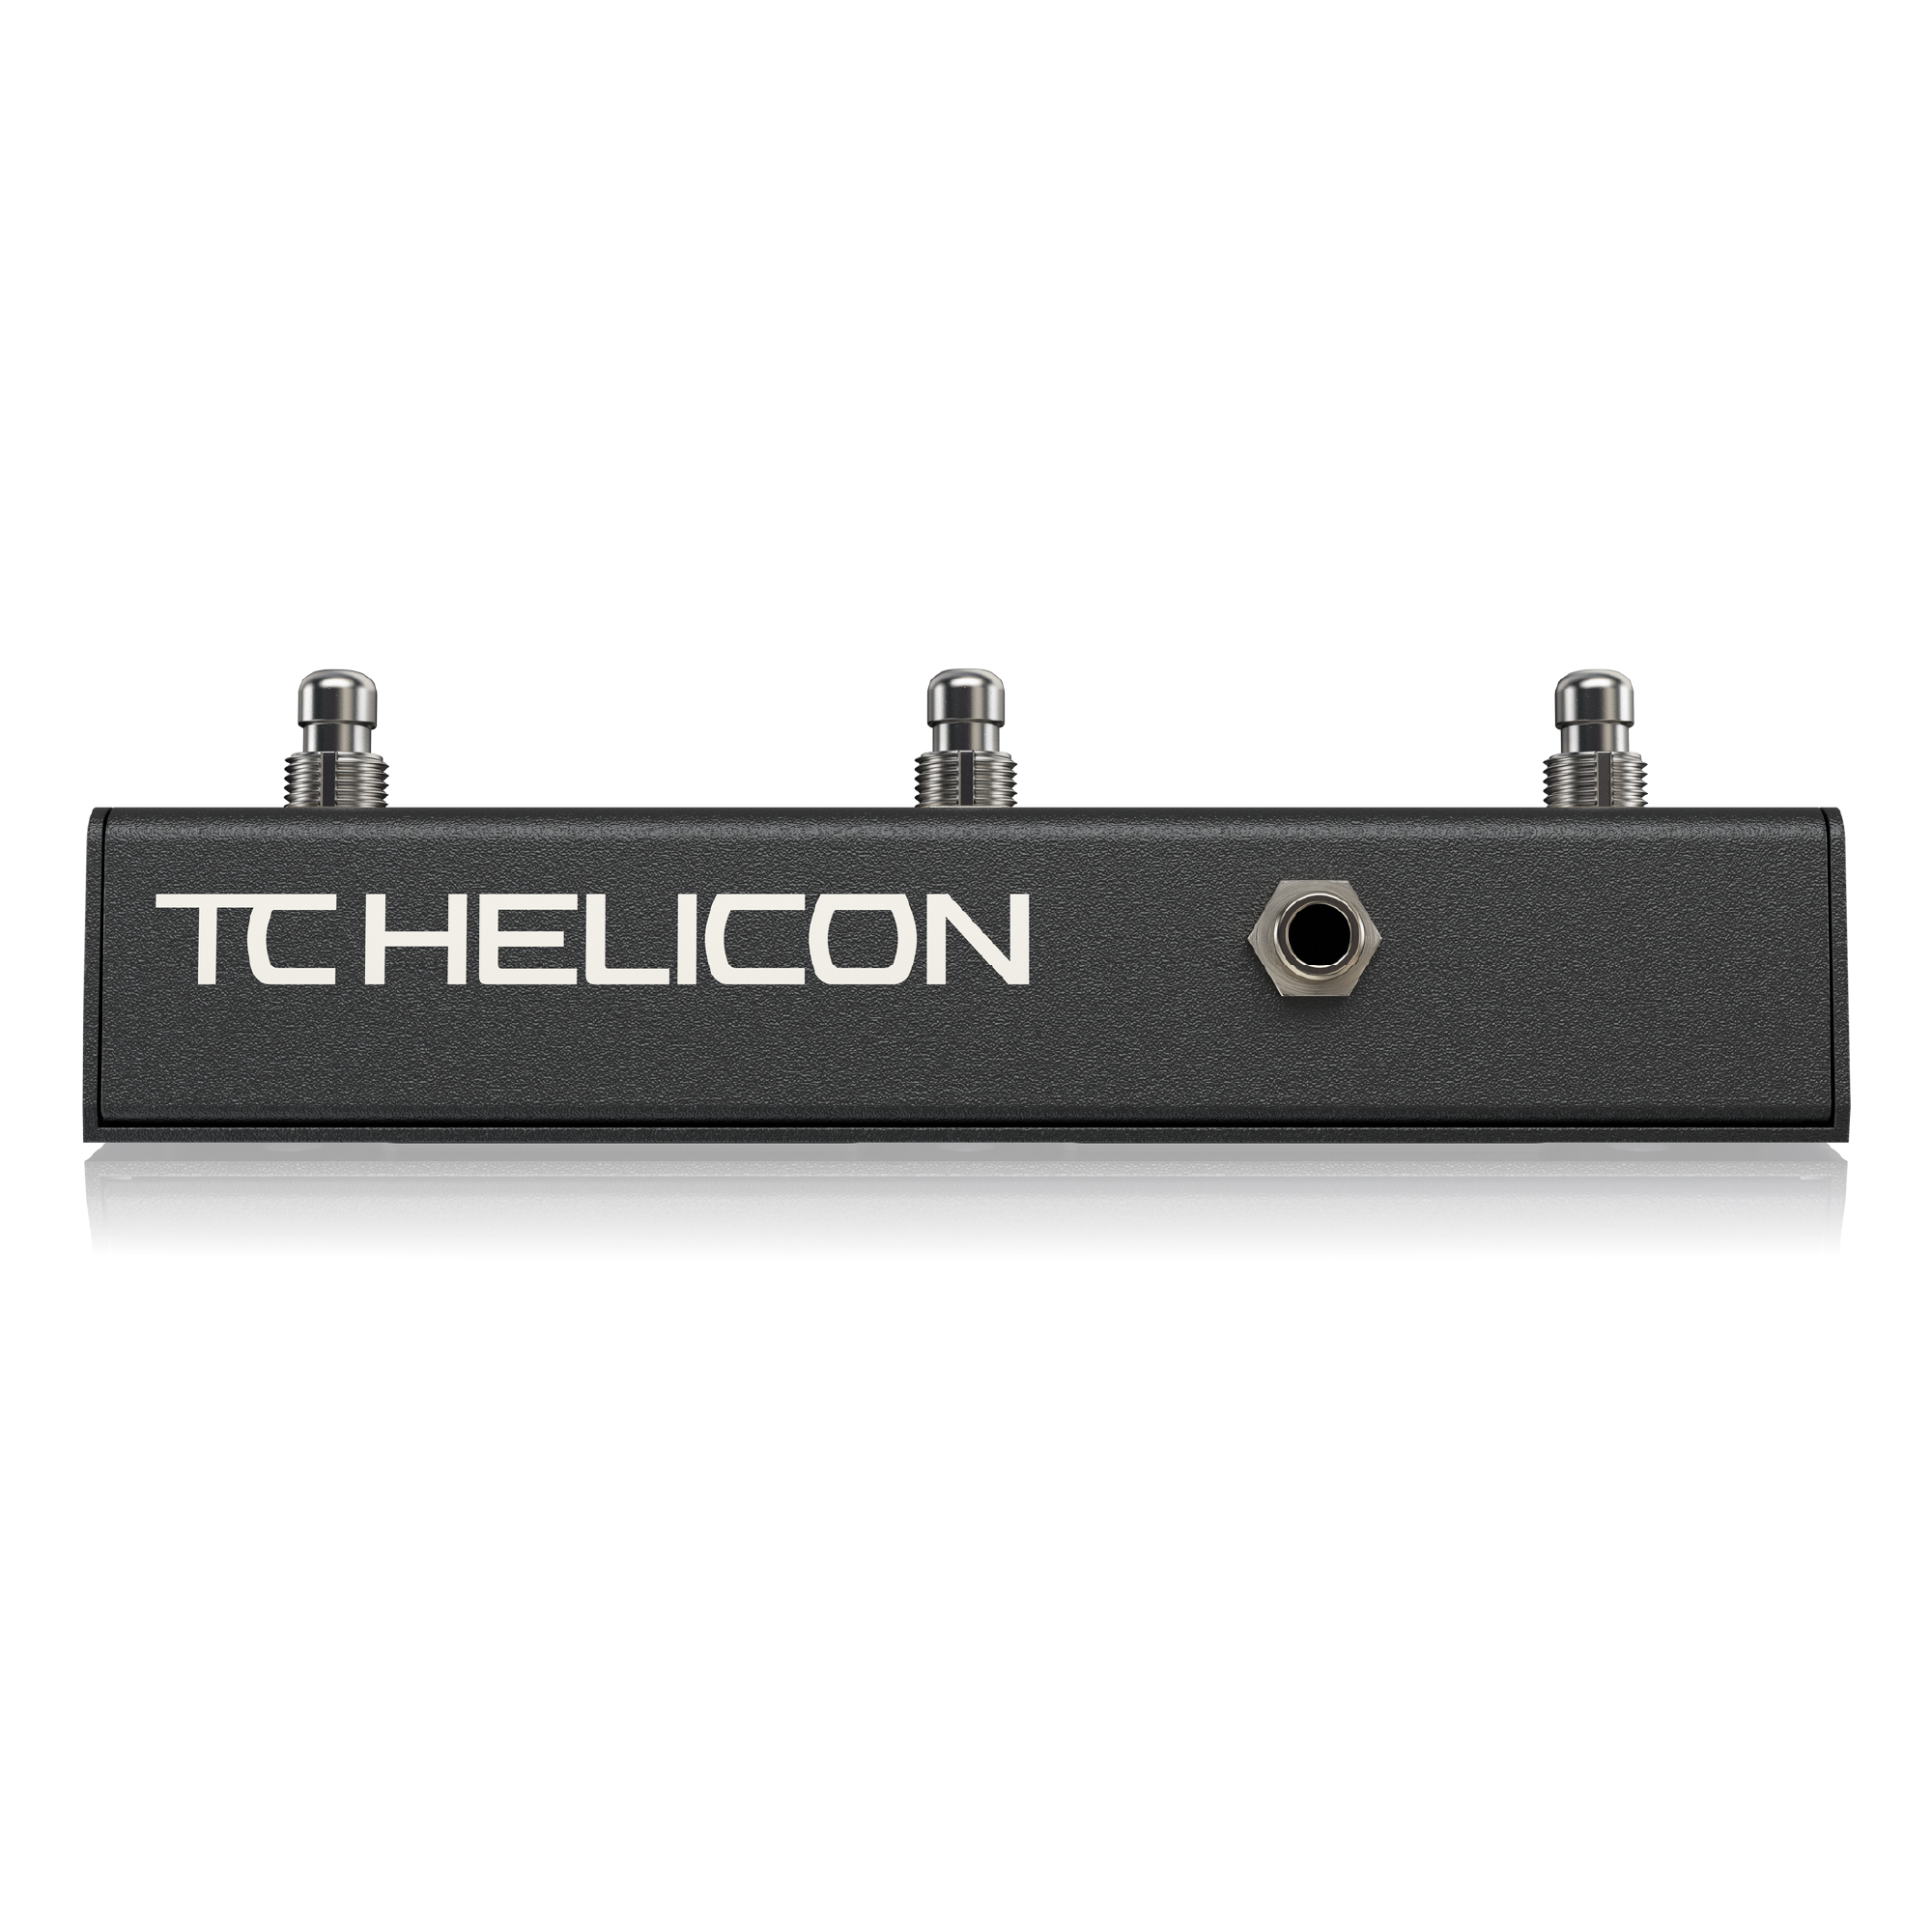 SWITCH-3 tc electronic helicon フットスイッチ